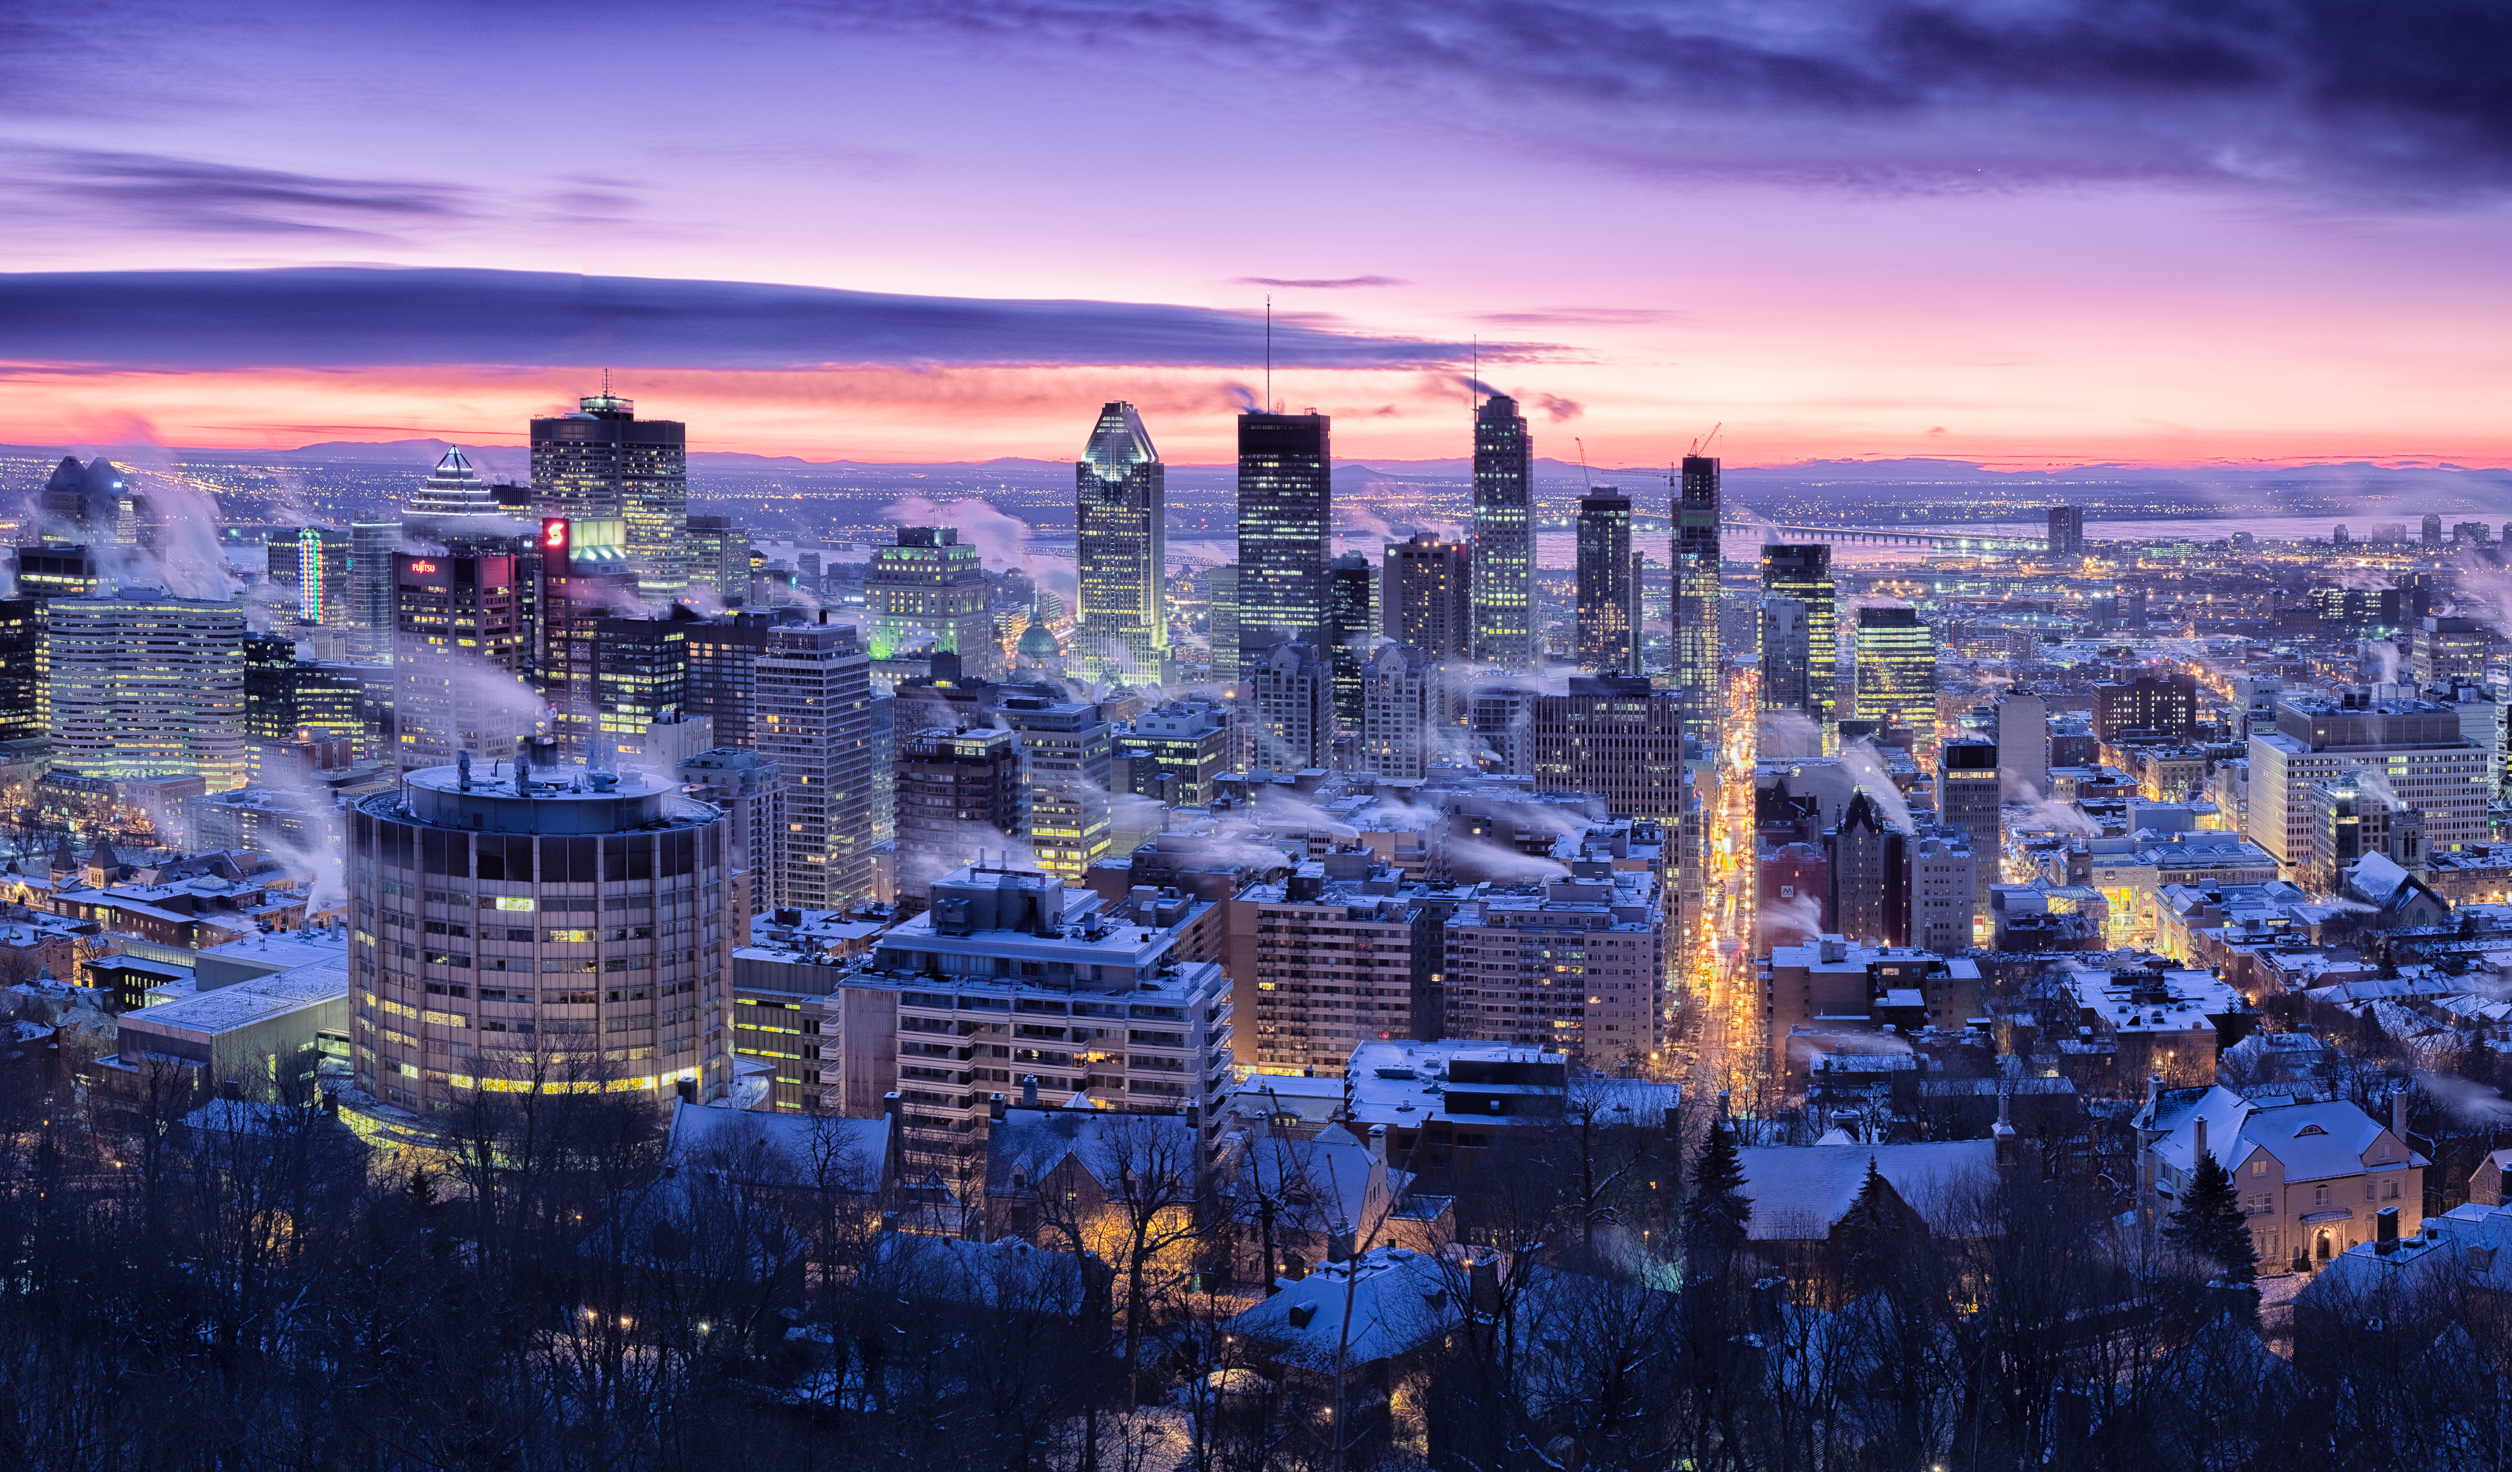 Kanada, Montreal, Wieżowce, Miasto